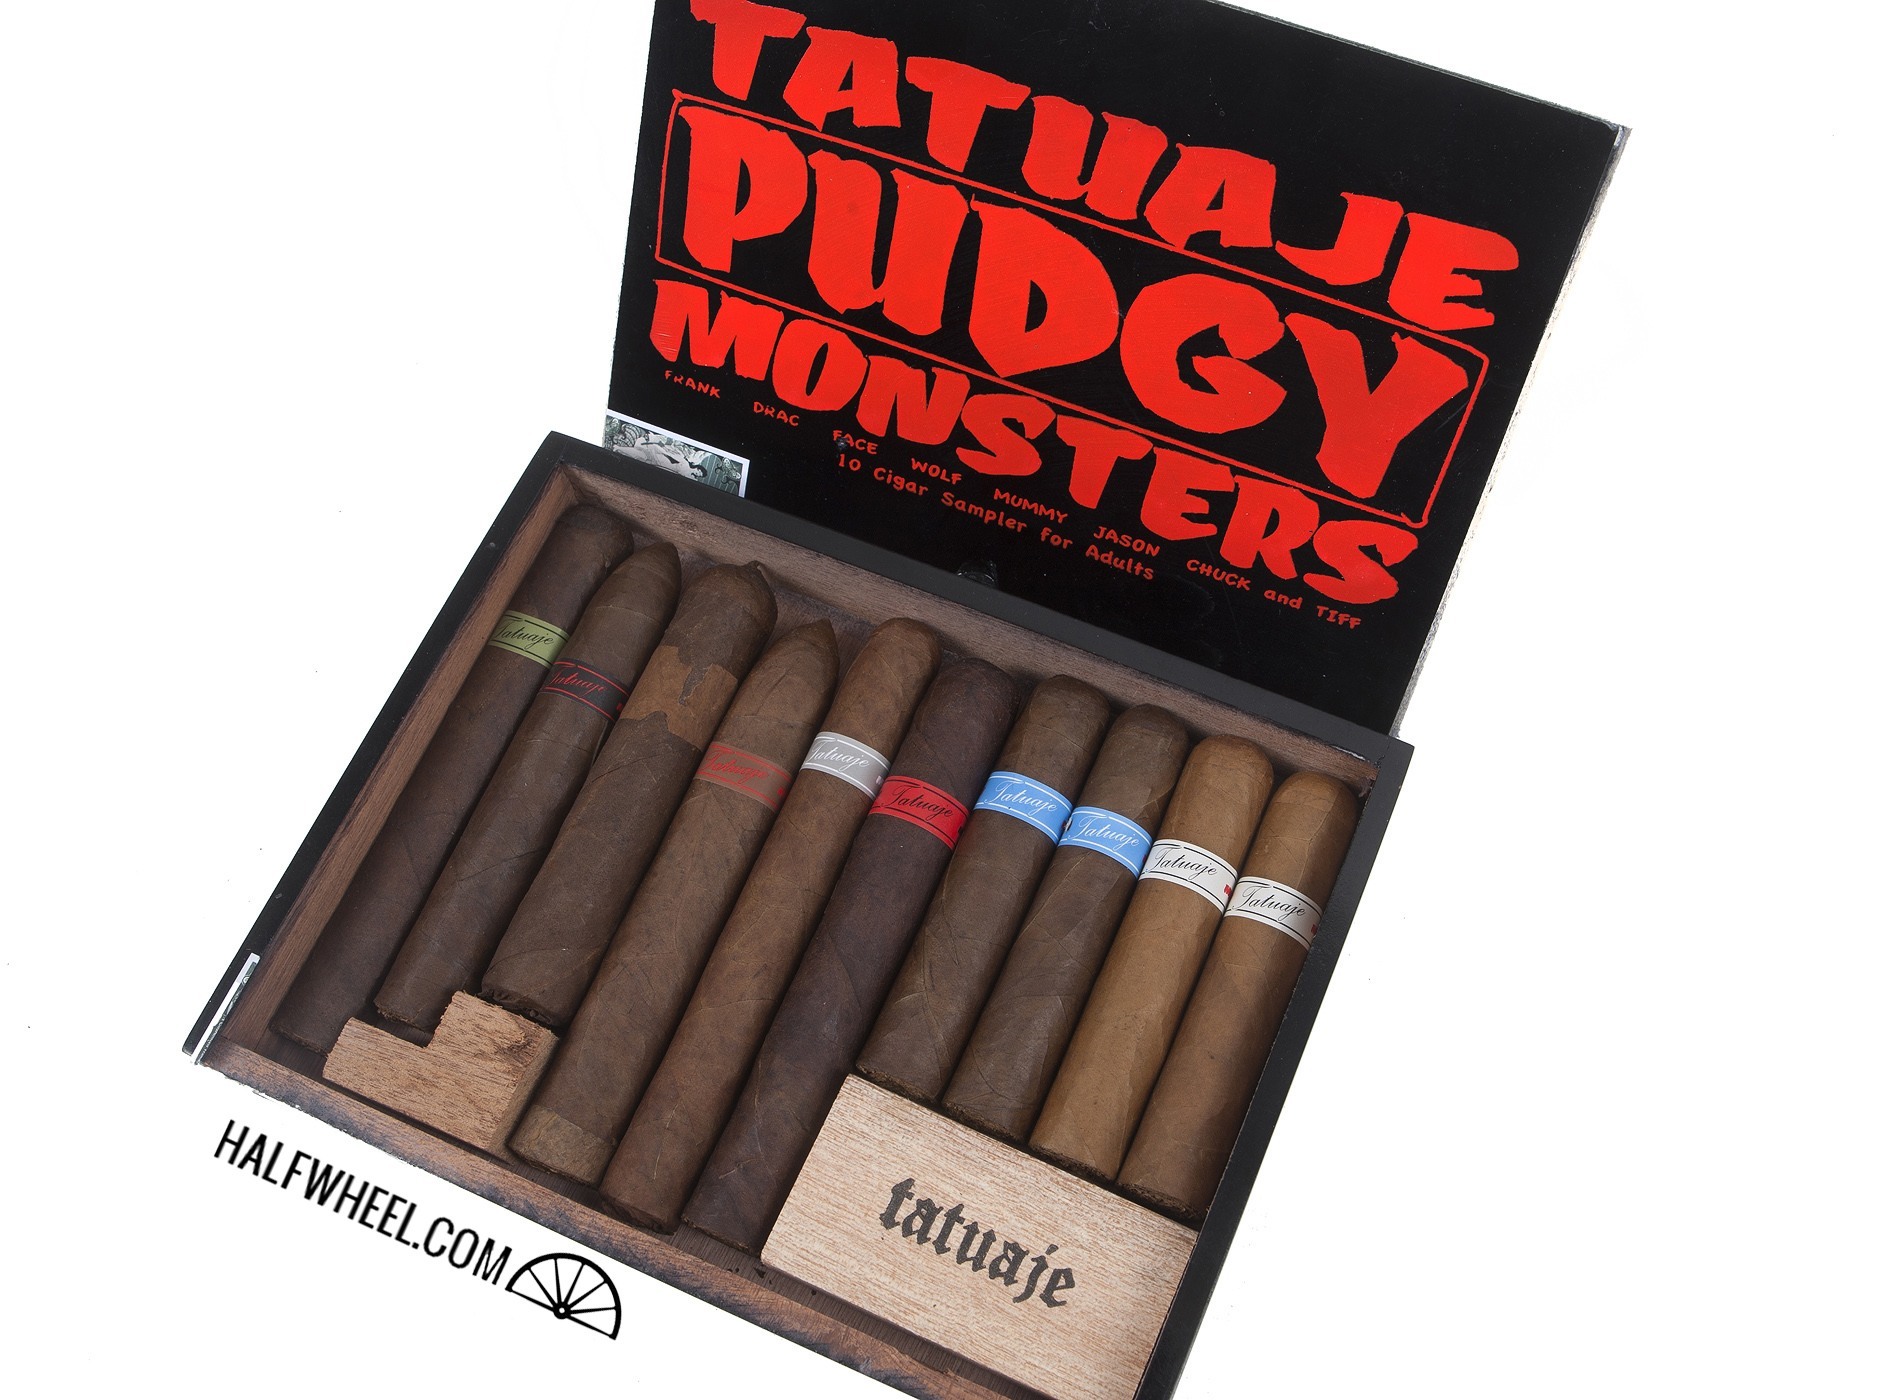 Tatuaje Pudgy Monster Box 3